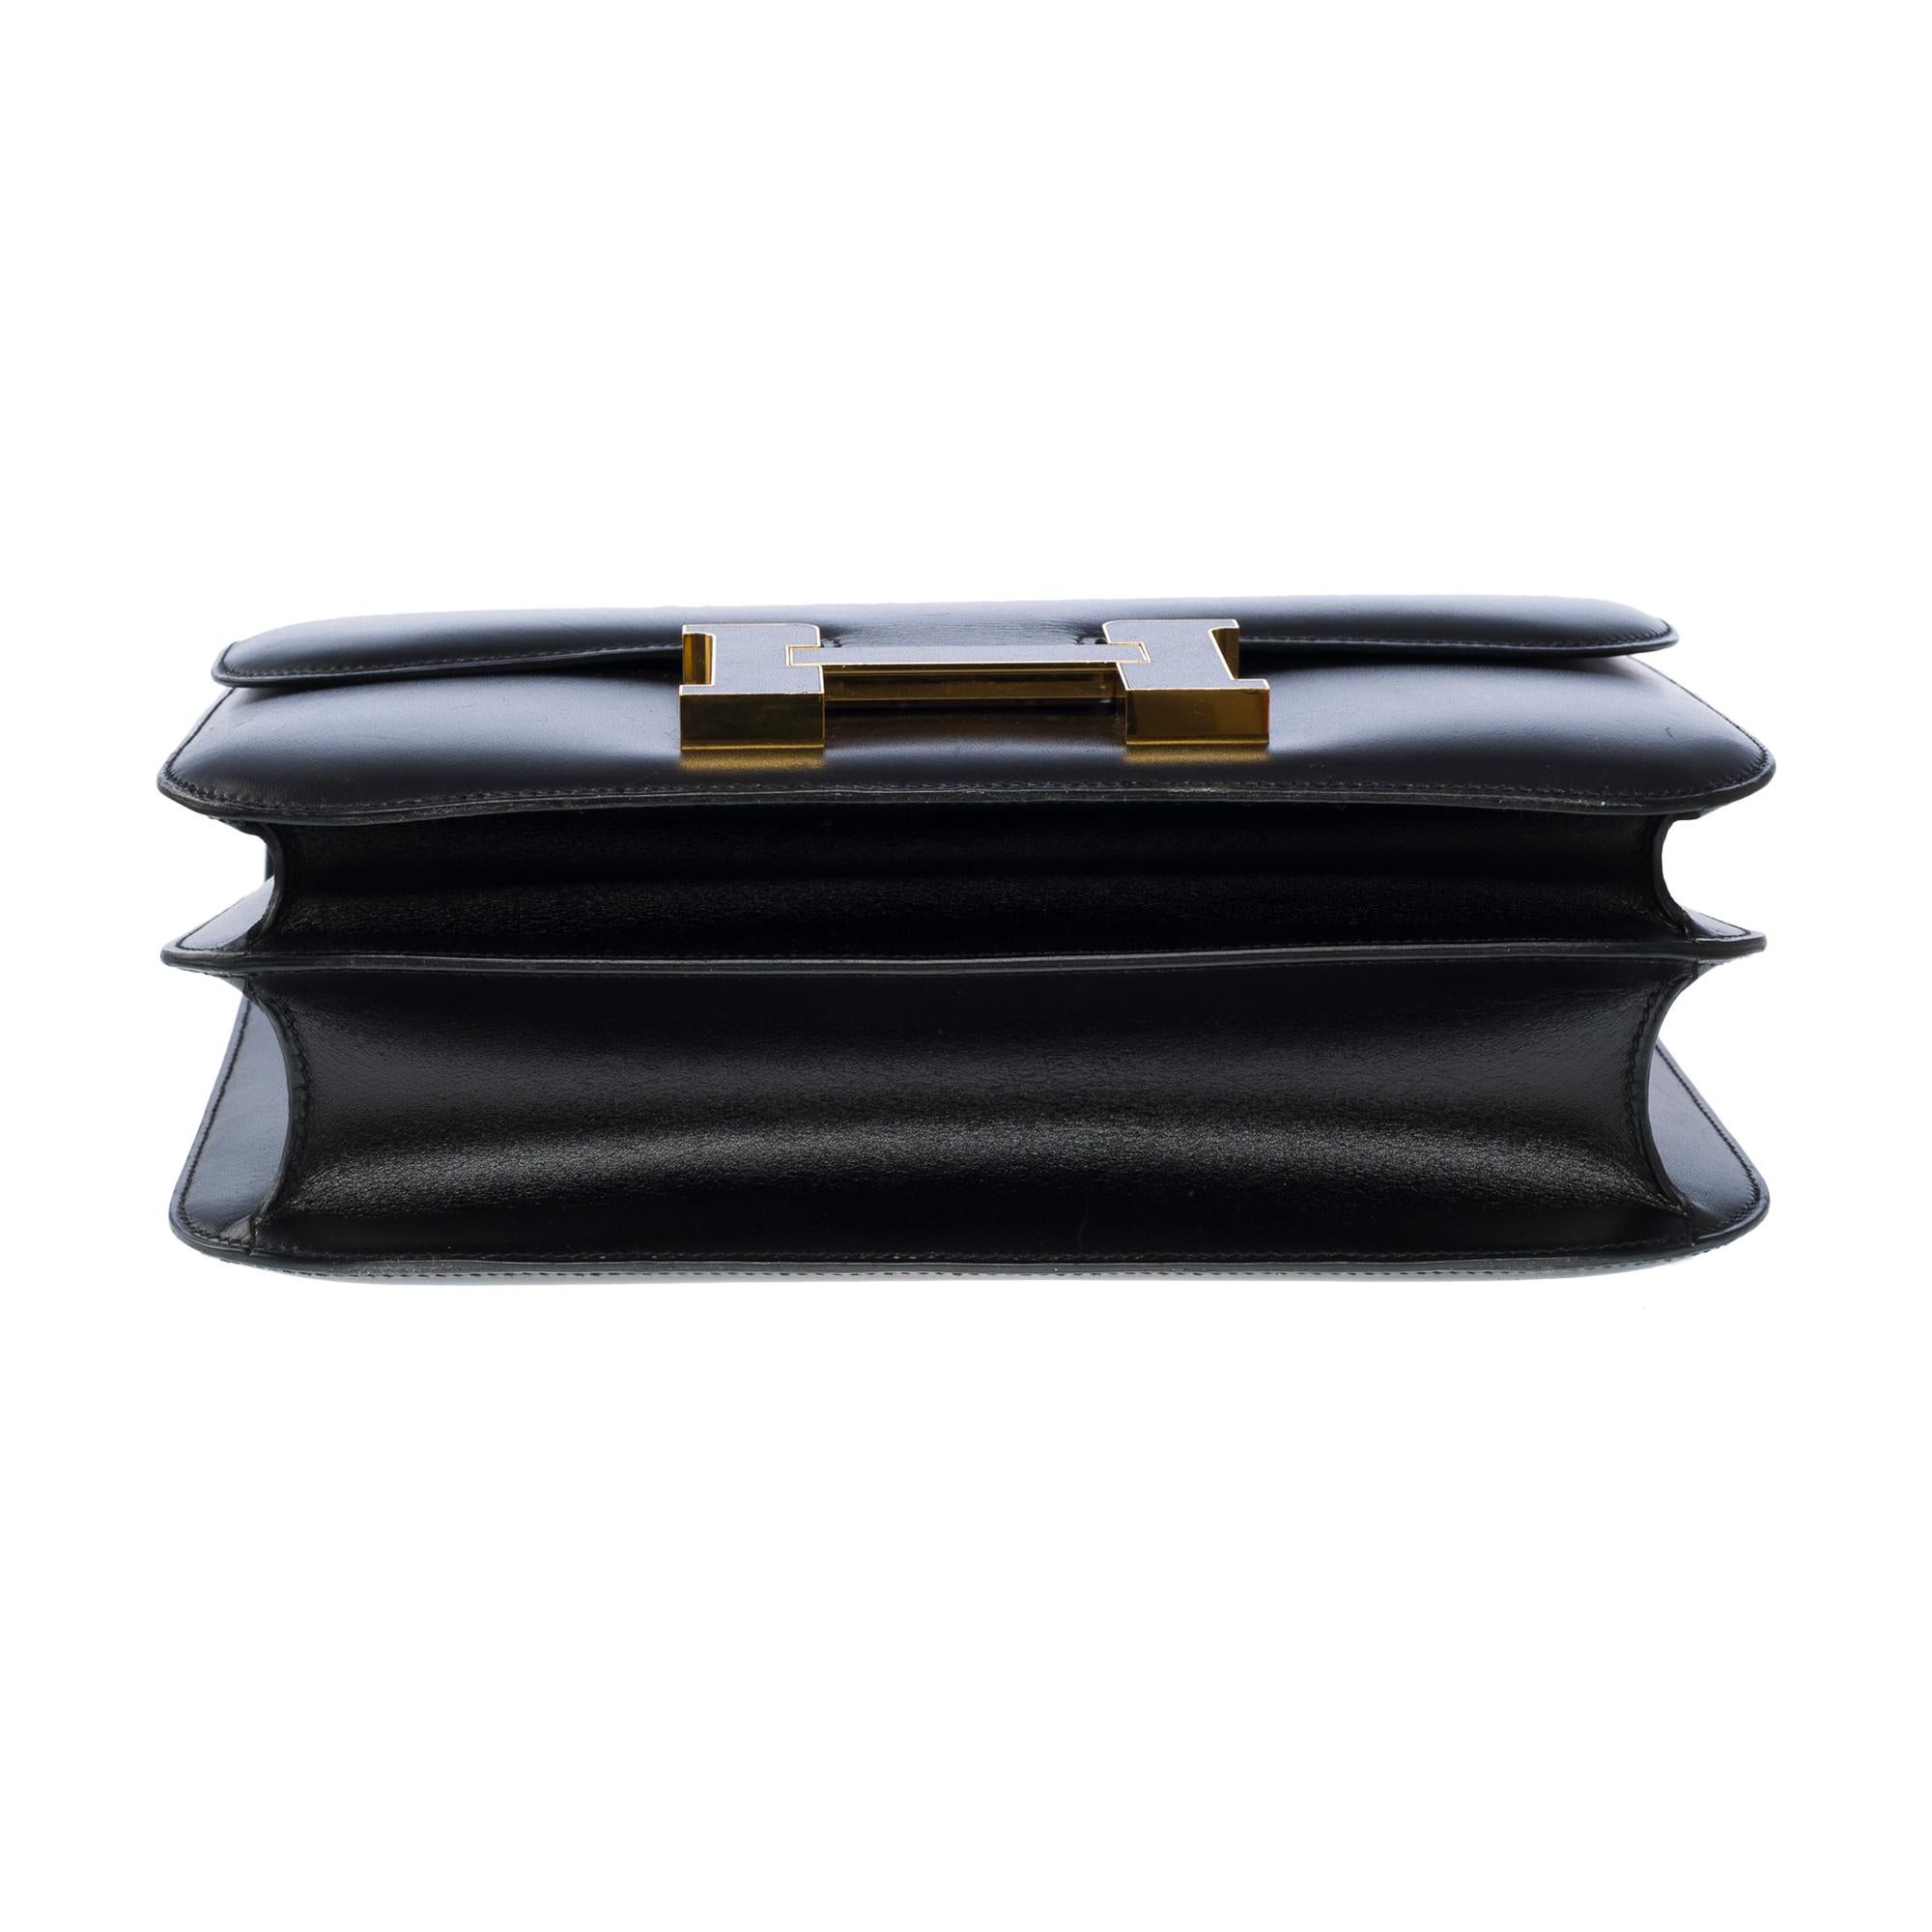  Rare Hermès Constance Cartable shoulder bag in Black Box Calf leather , GHW For Sale 7